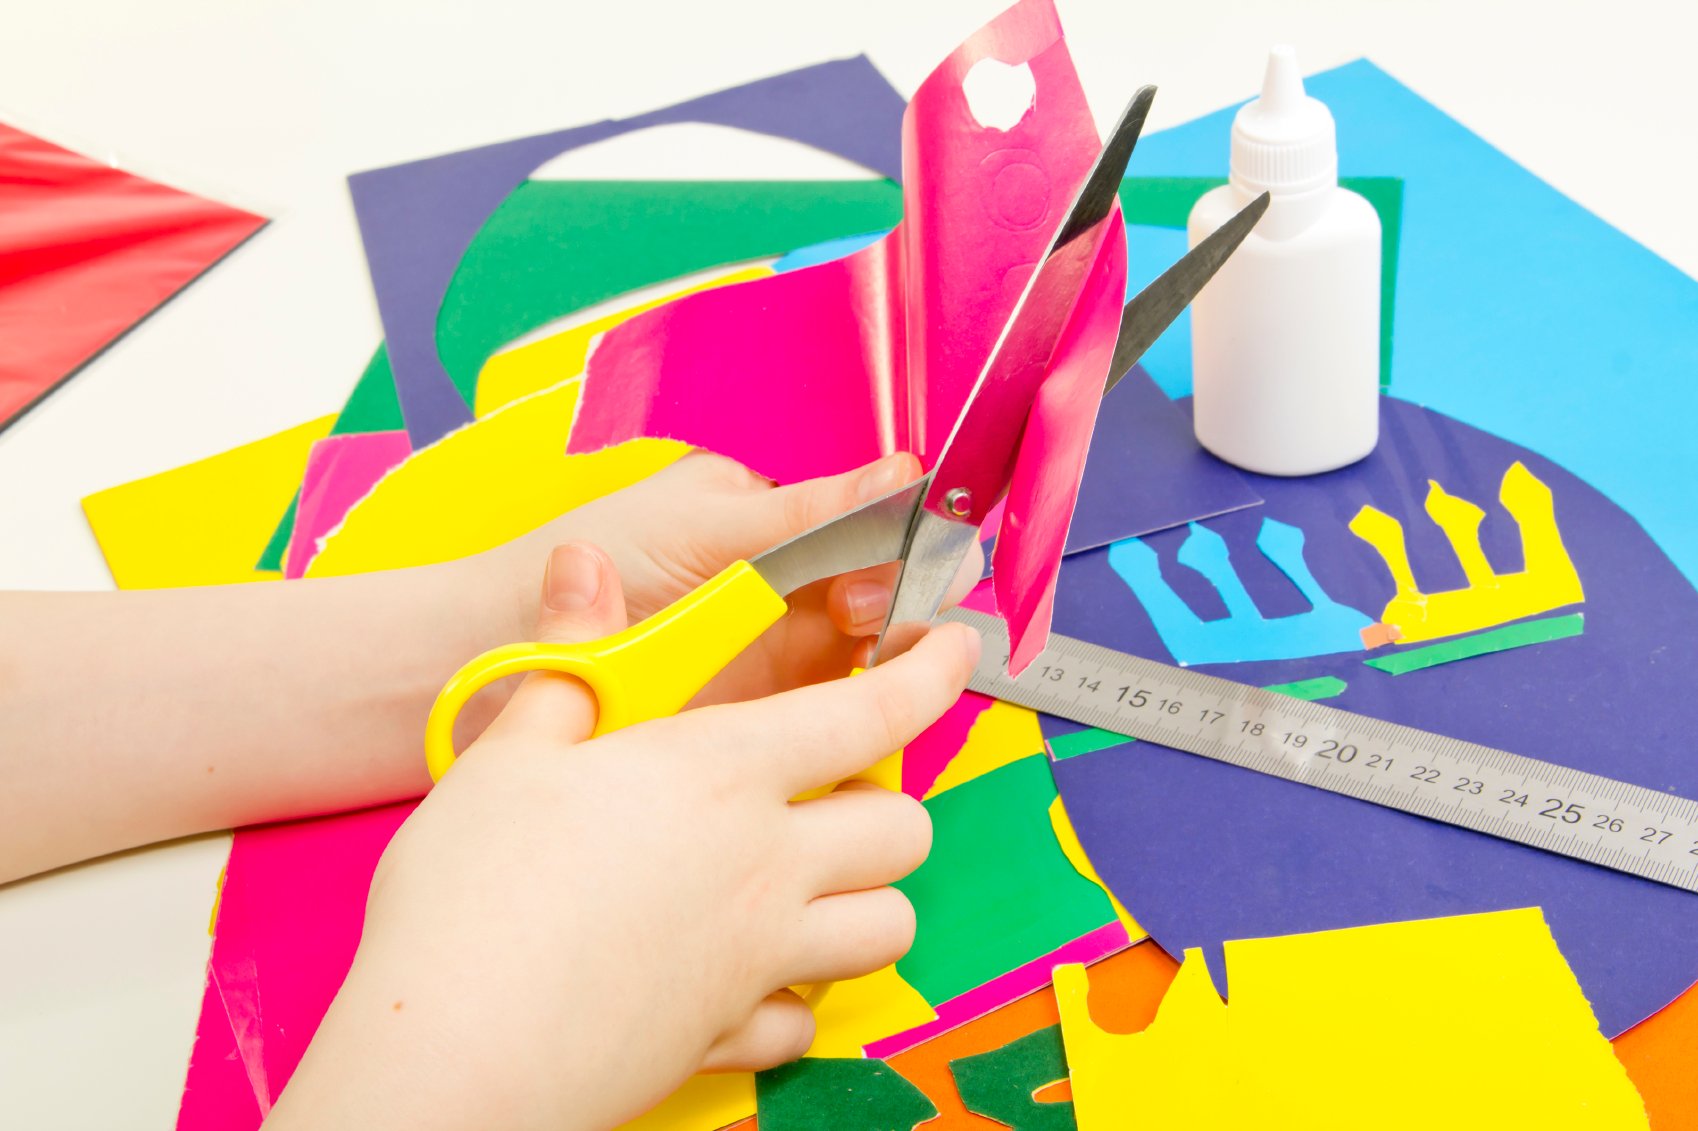 Colored paper, glue, scissors and children’s handmade card